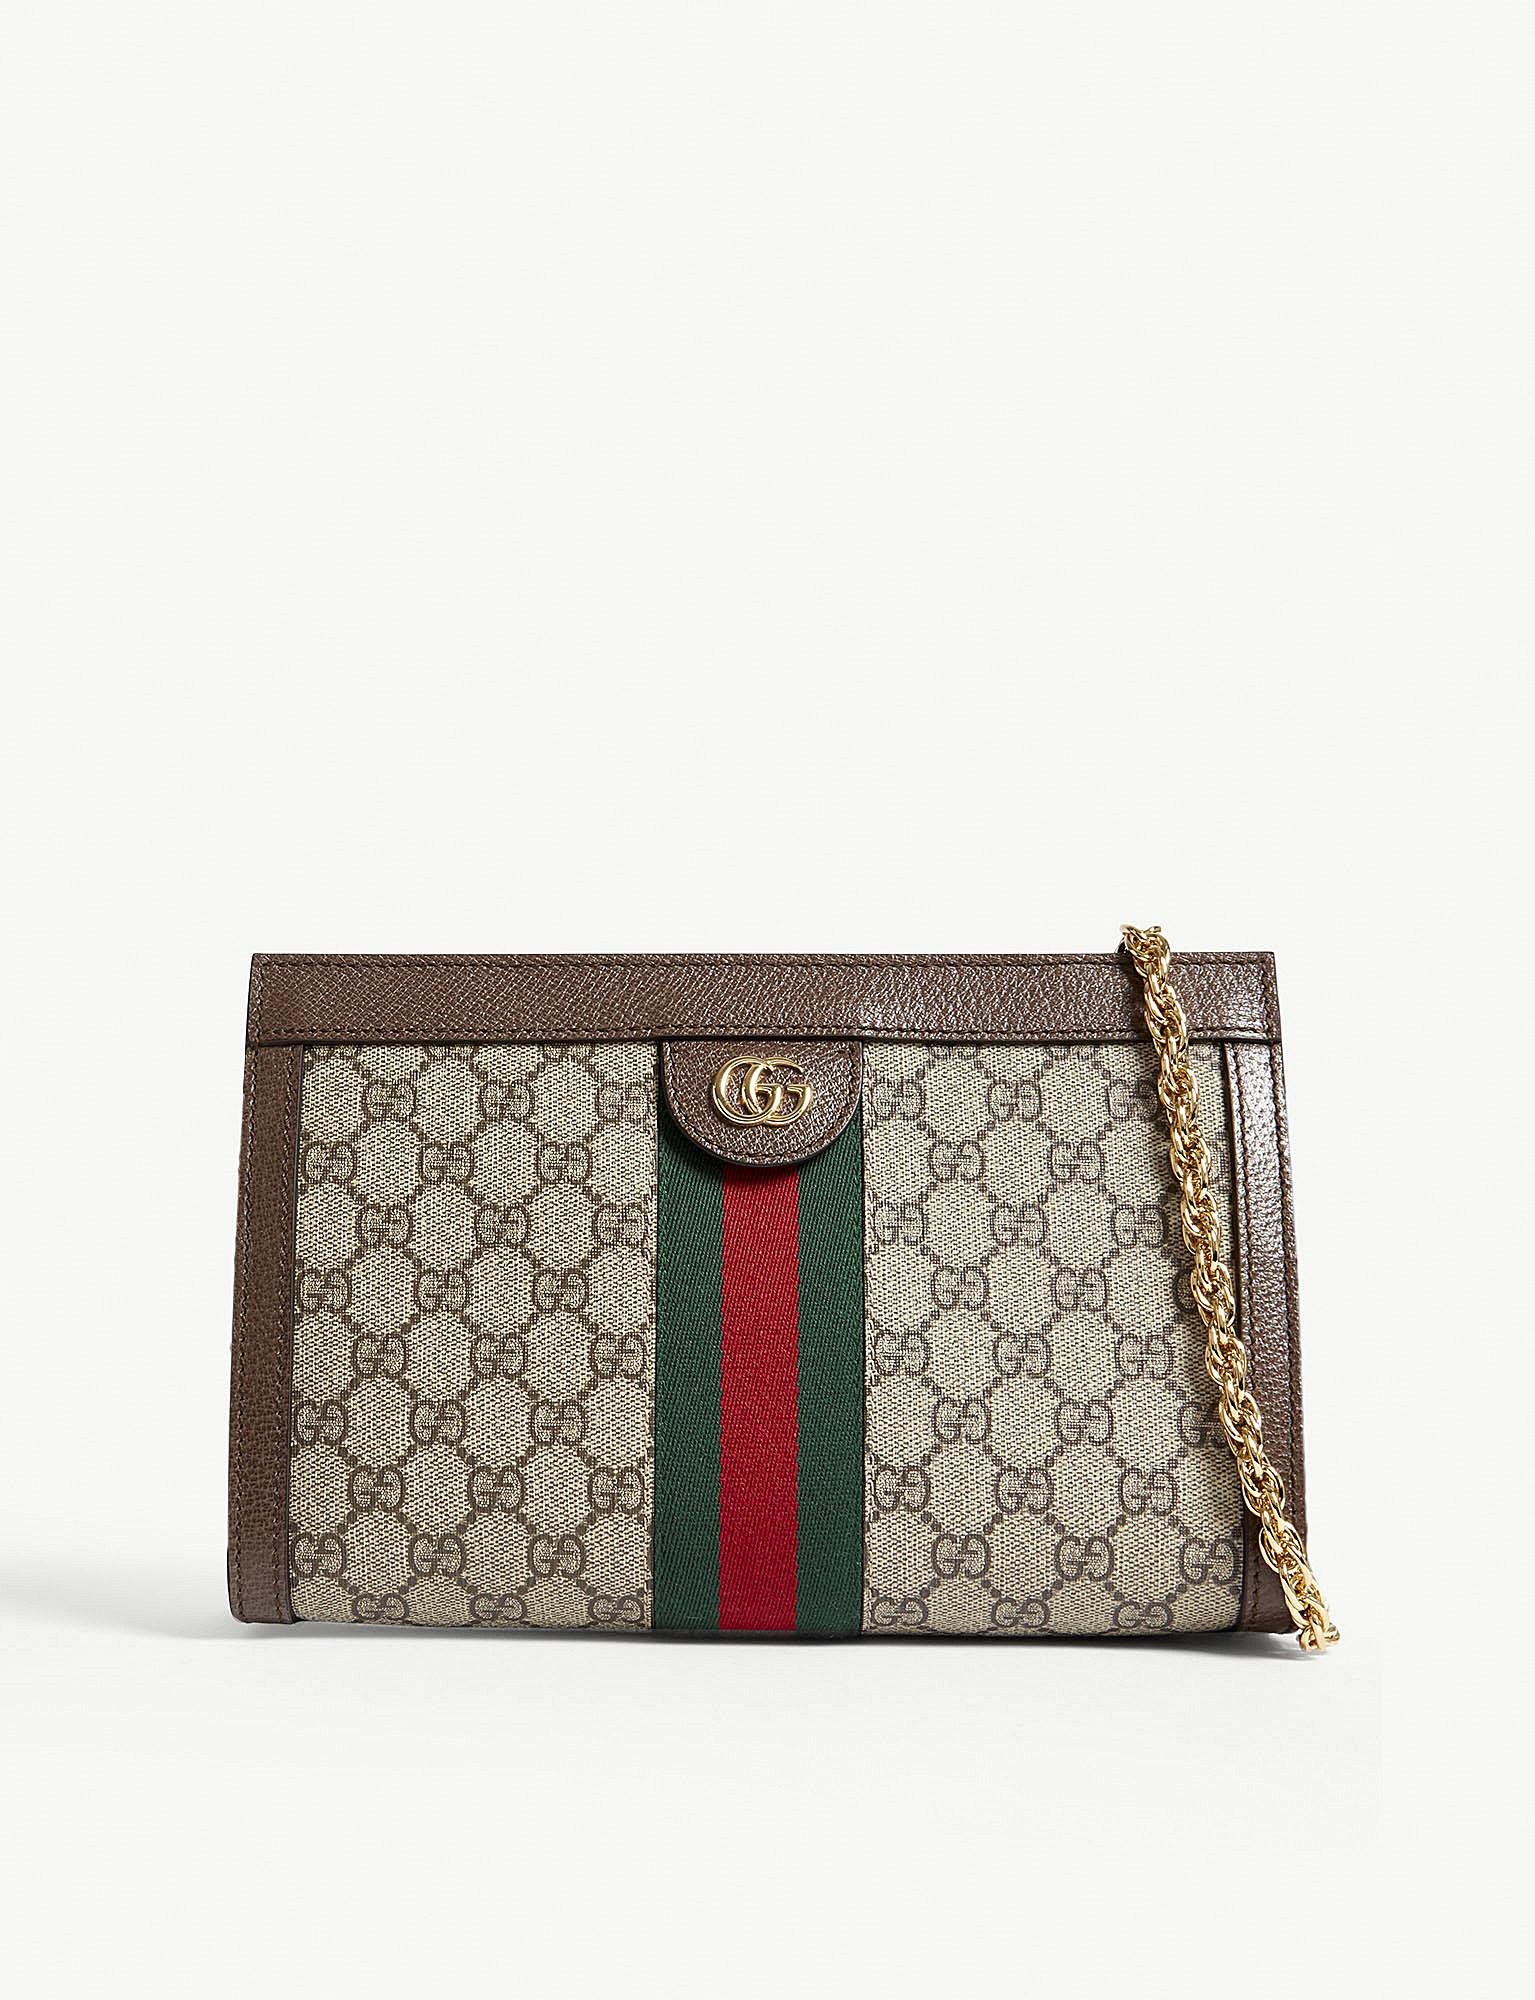 Lyst - Gucci Web Stripe Small Gg Supreme Shoulder Bag in Brown